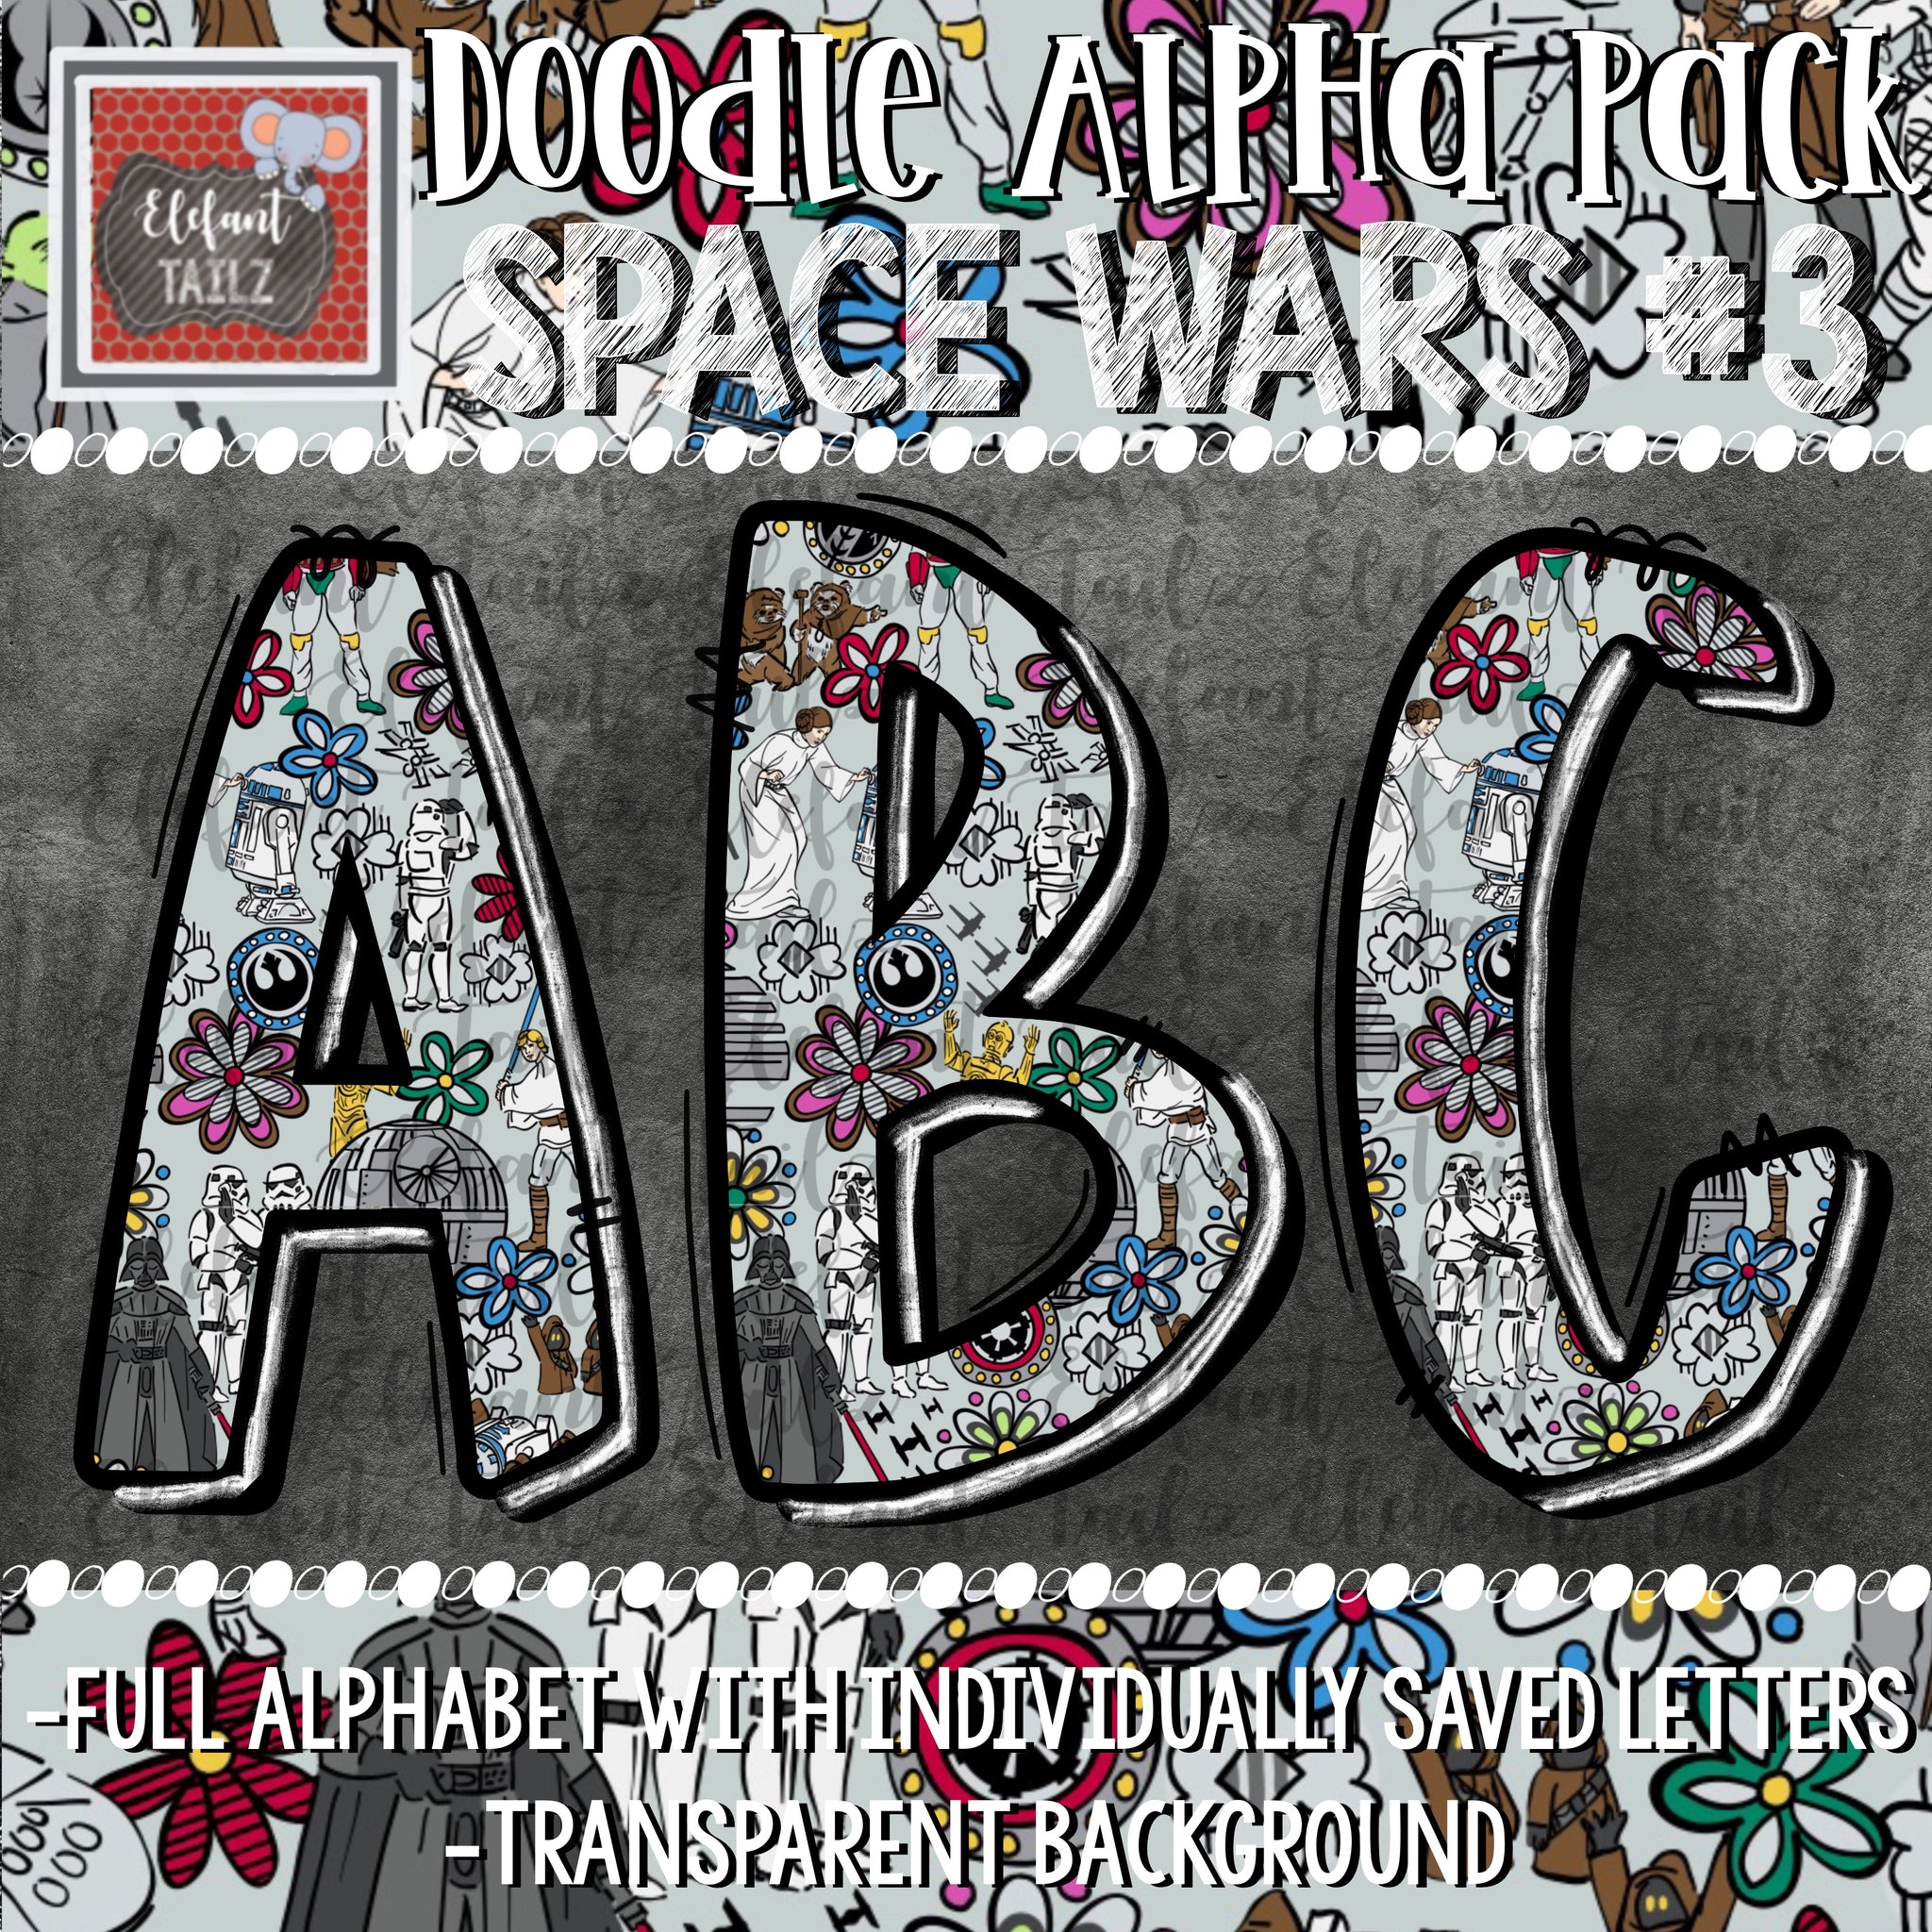 Doodle Alpha - Space Wars #3